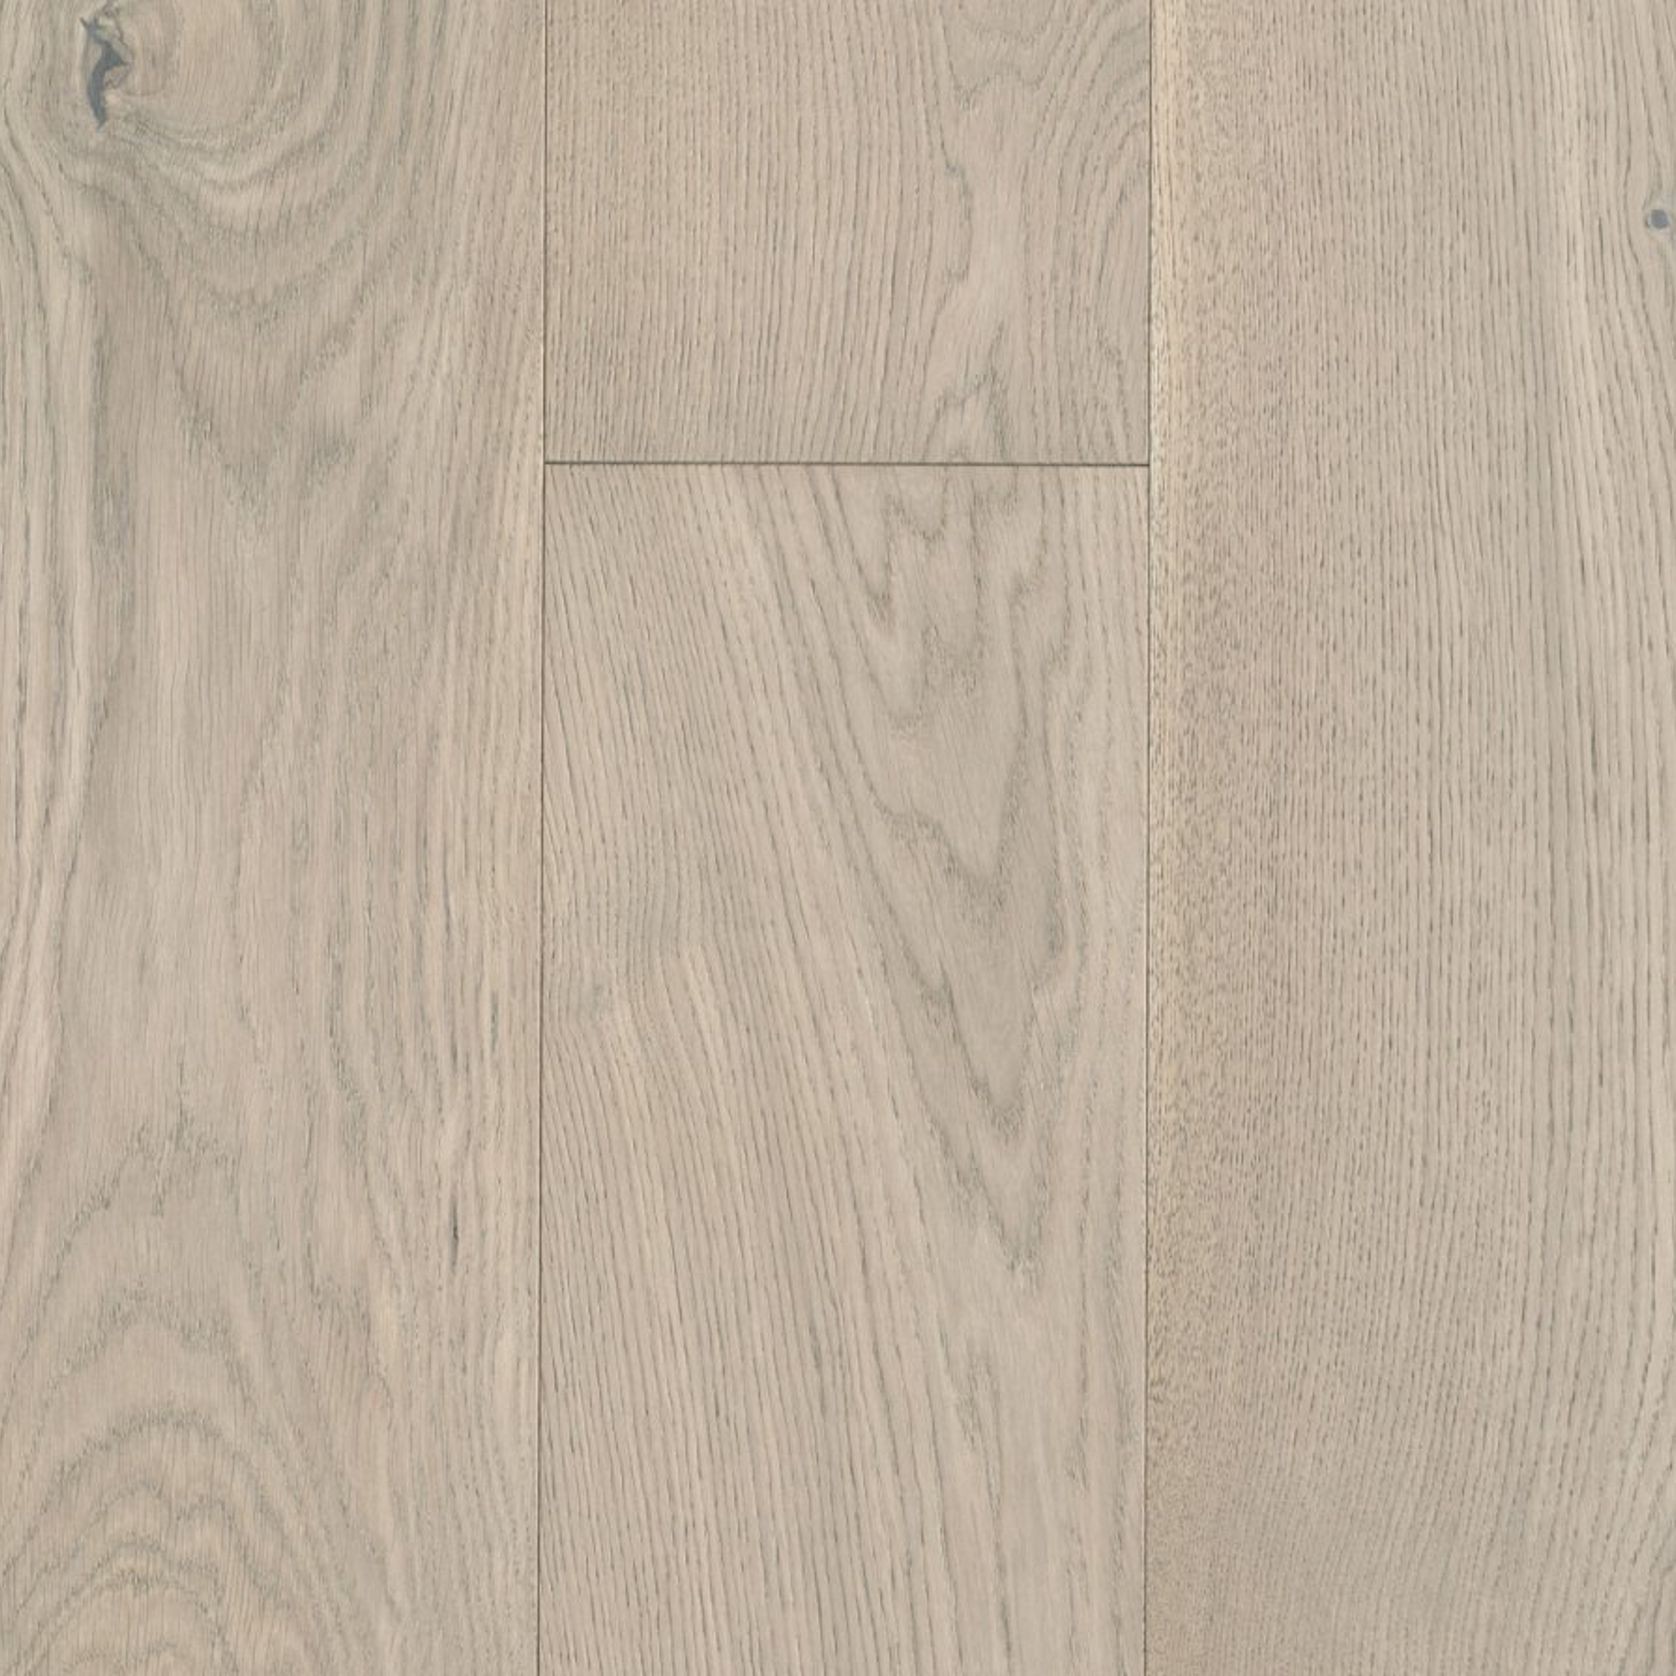 Moda Altro Mondello Feature Plank Timber Flooring gallery detail image